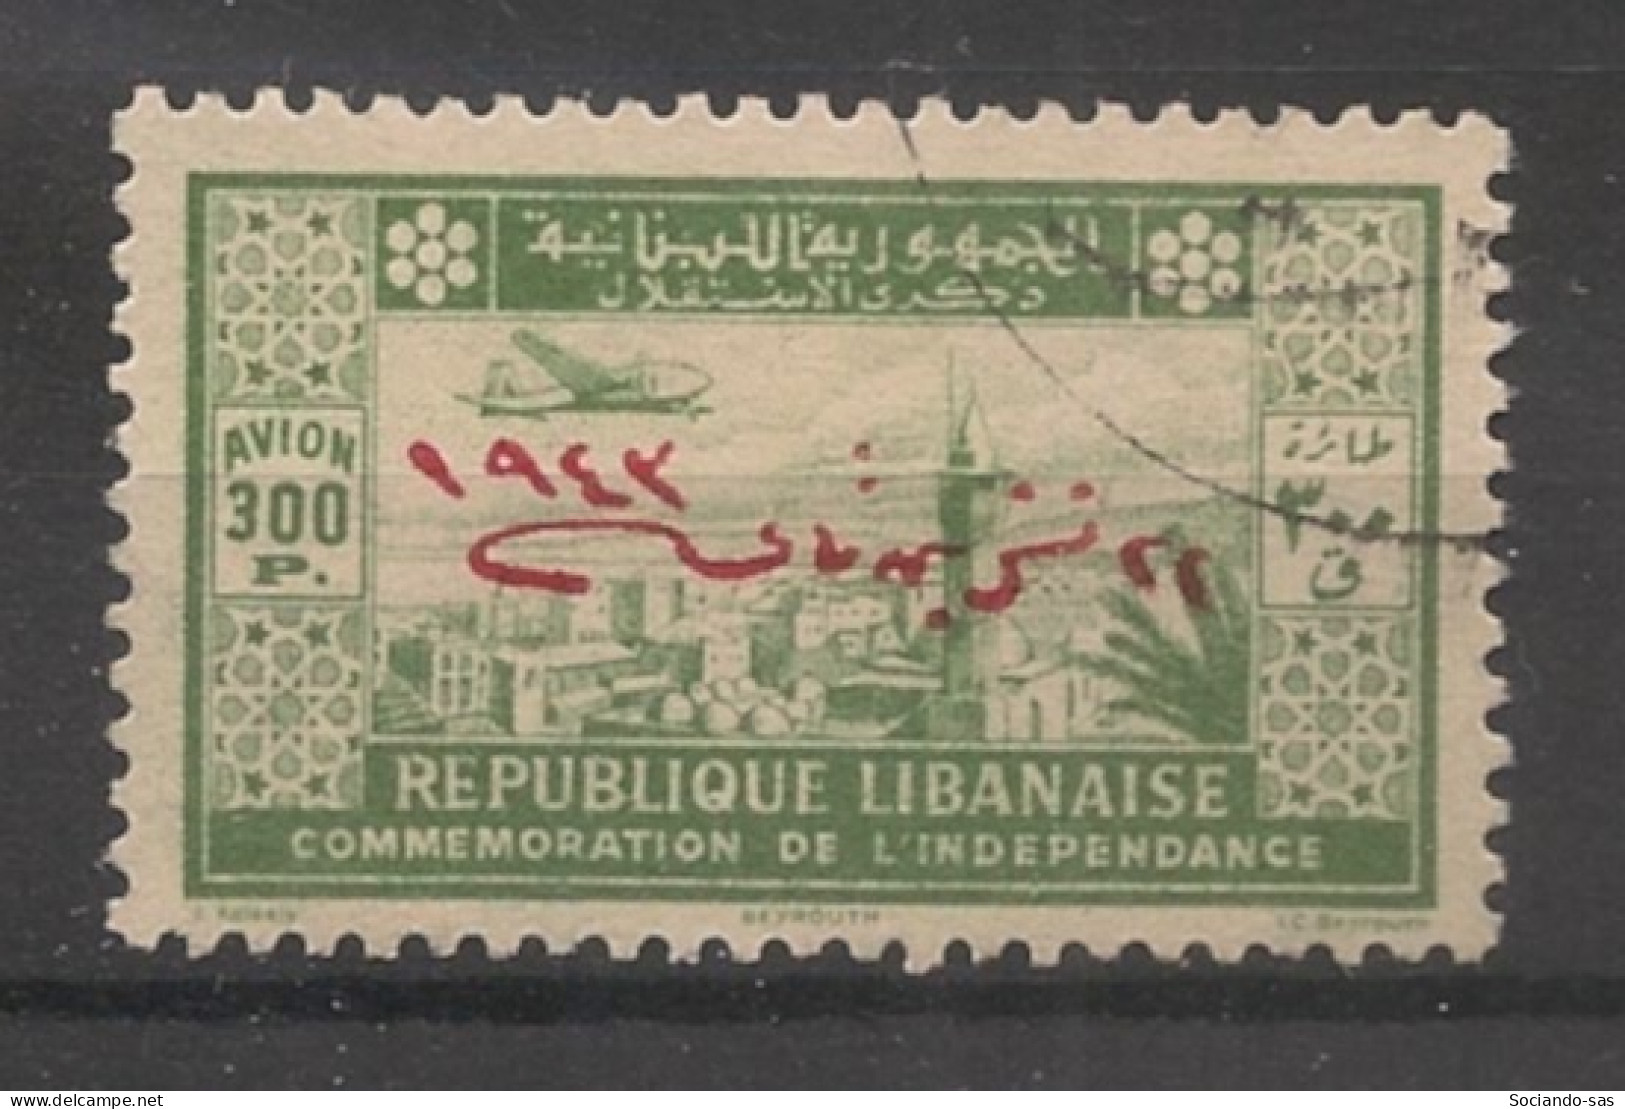 GRAND LIBAN - 1944 - Poste Aérienne PA N°YT. 95 - Avion 300pi Vert - Oblitéré / Used - Used Stamps